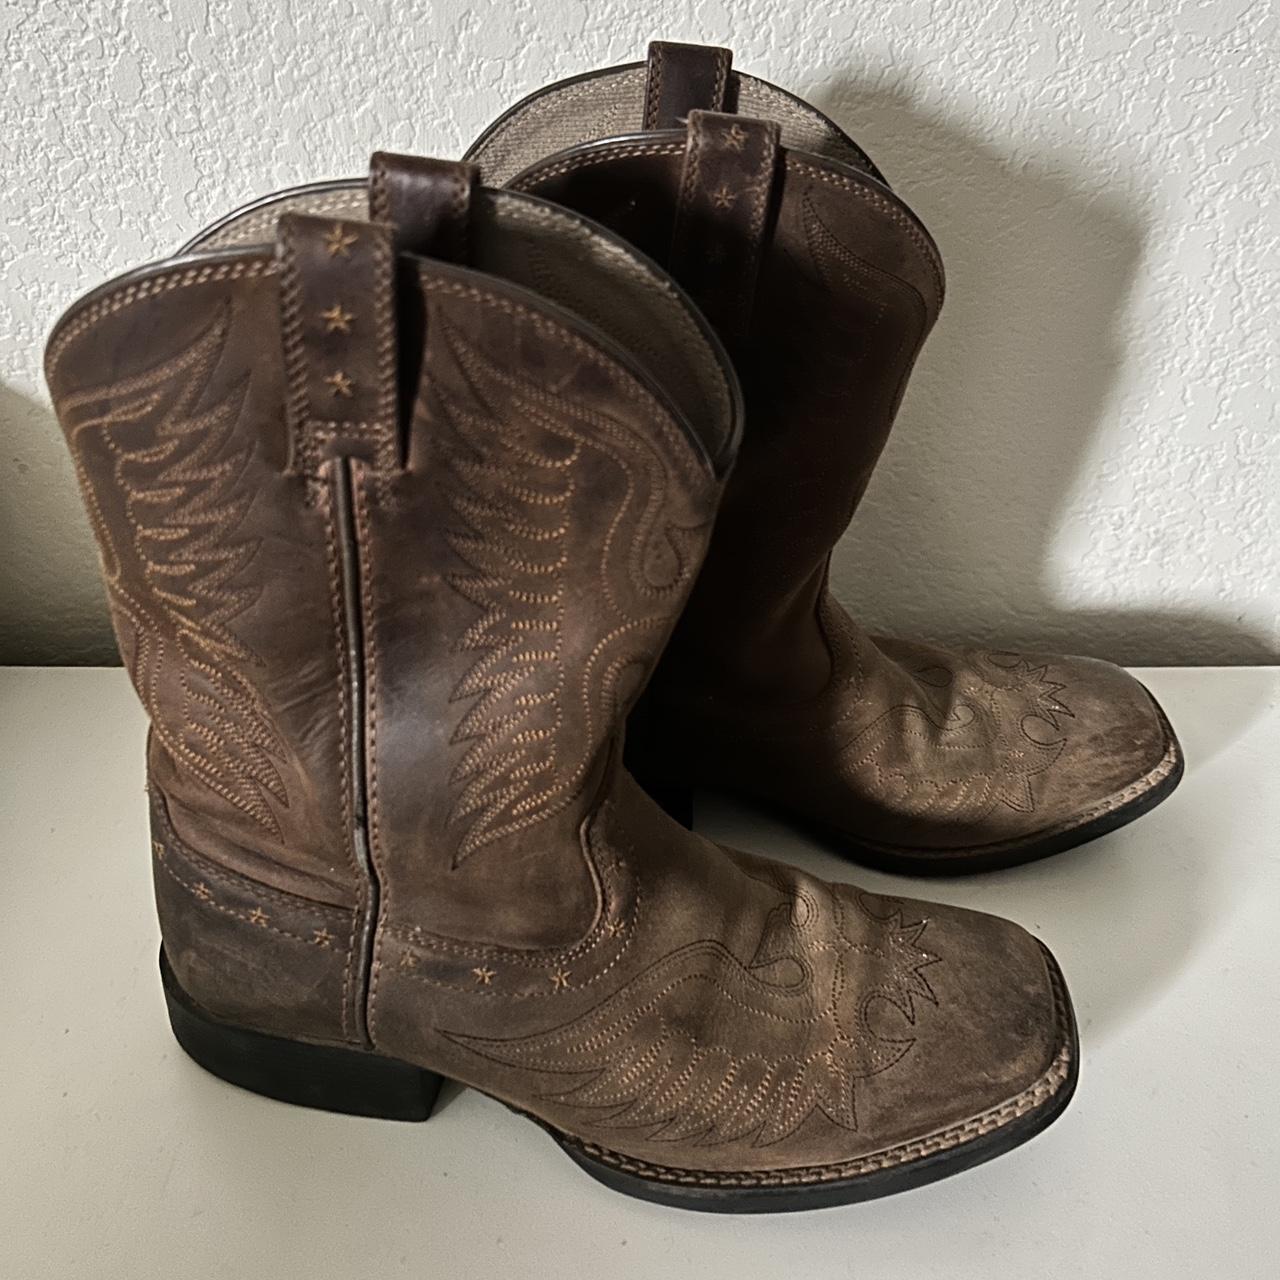 Brown leather cowboy boots Square toe Men’s 4 so... - Depop